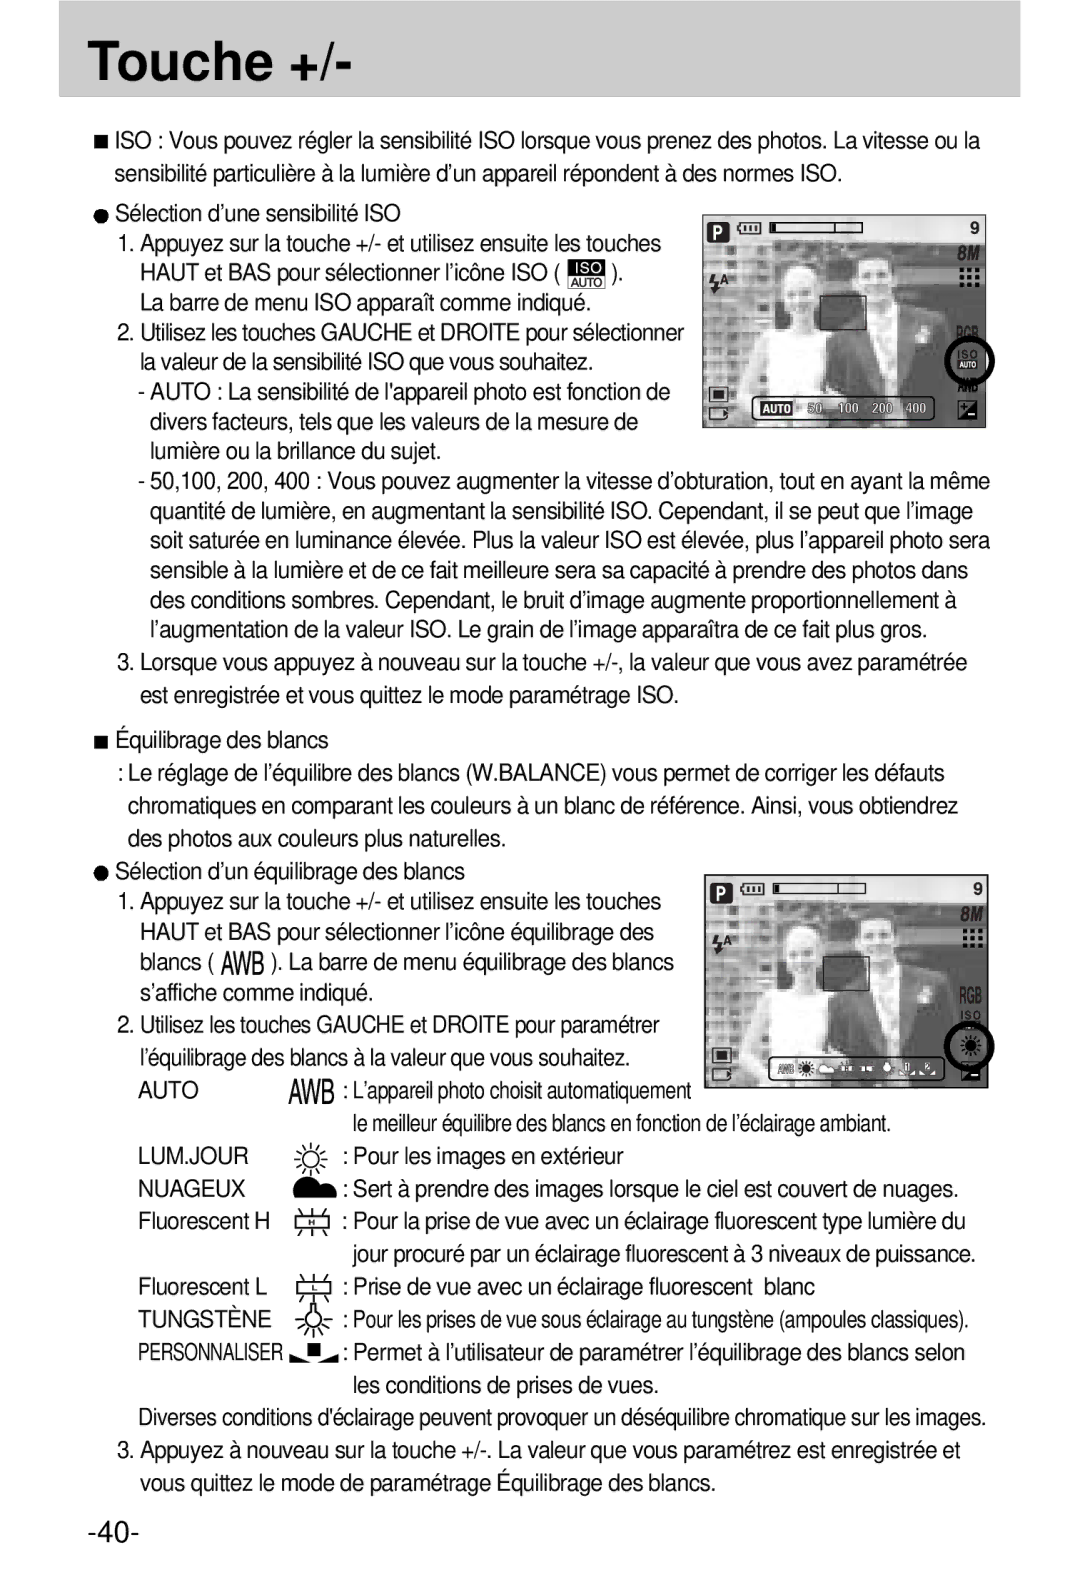 Samsung EC-V800ZSBA/FR manual Lum.Jour, Nuageux, Tungstène, Personnaliser 